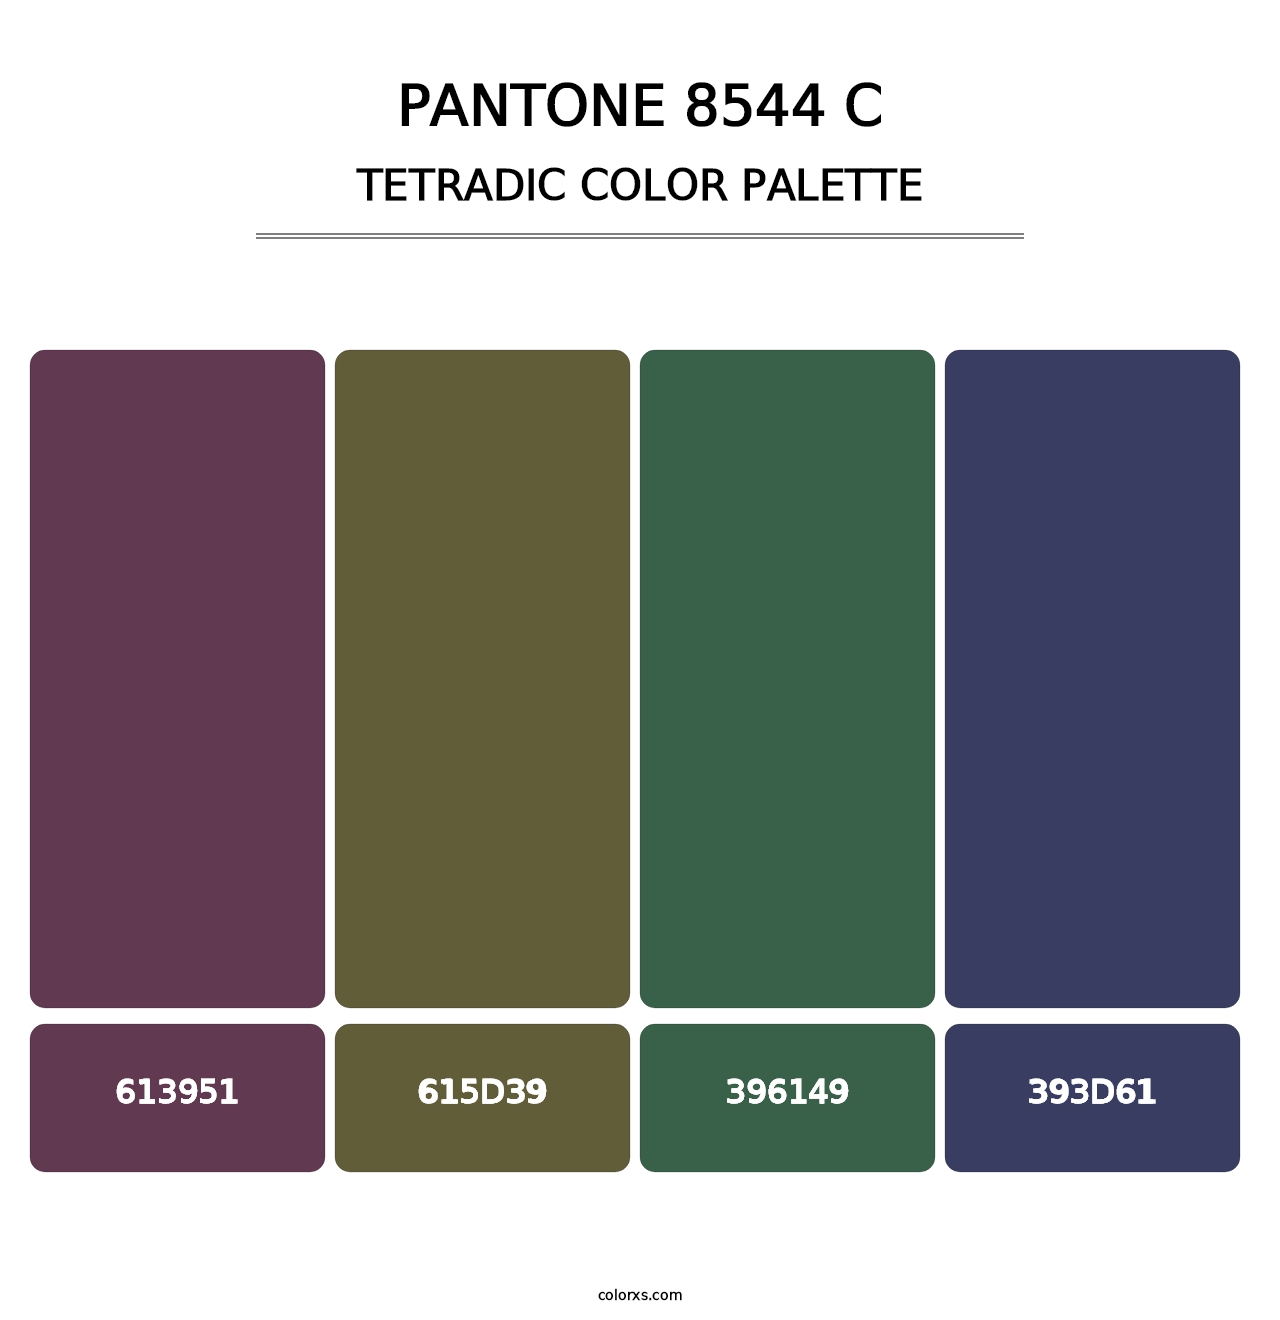 PANTONE 8544 C - Tetradic Color Palette